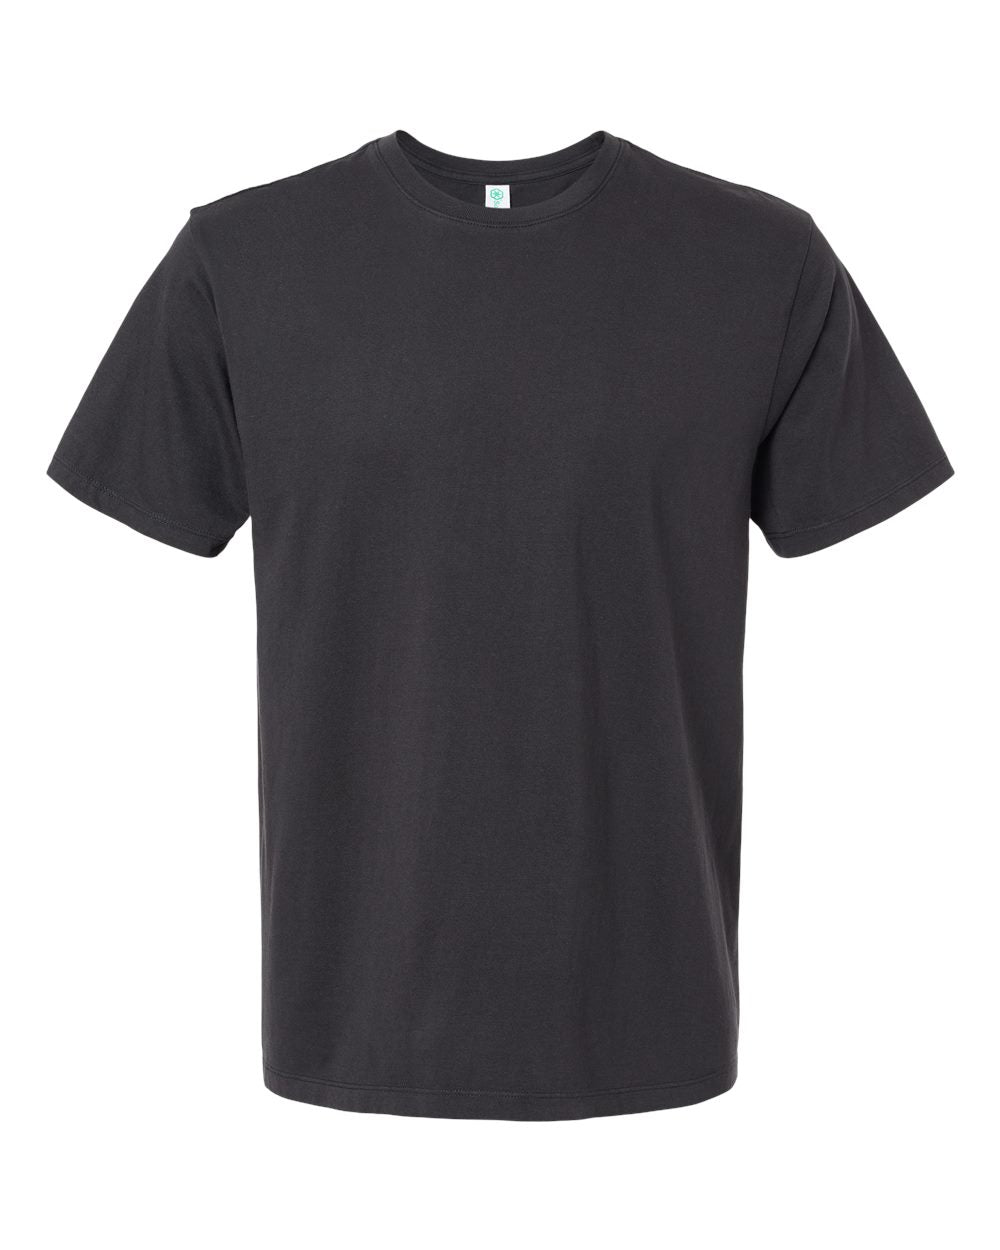 Softshirts® Unisex Organic Cotton T-shirt in black